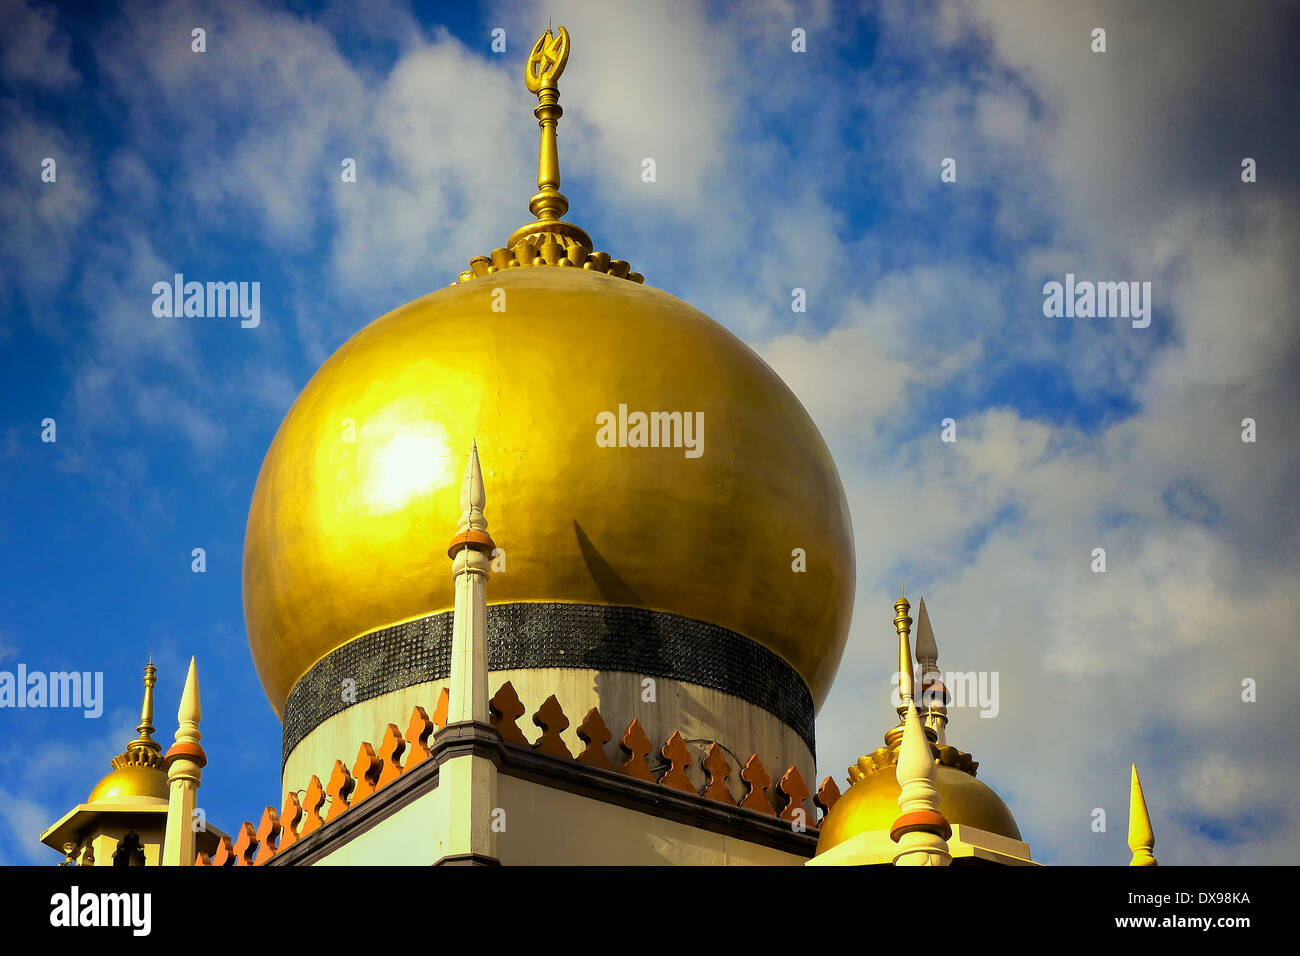 La cúpula dorada de la Mezquita del Sultán en Kampong Glam, Singapur Foto de stock